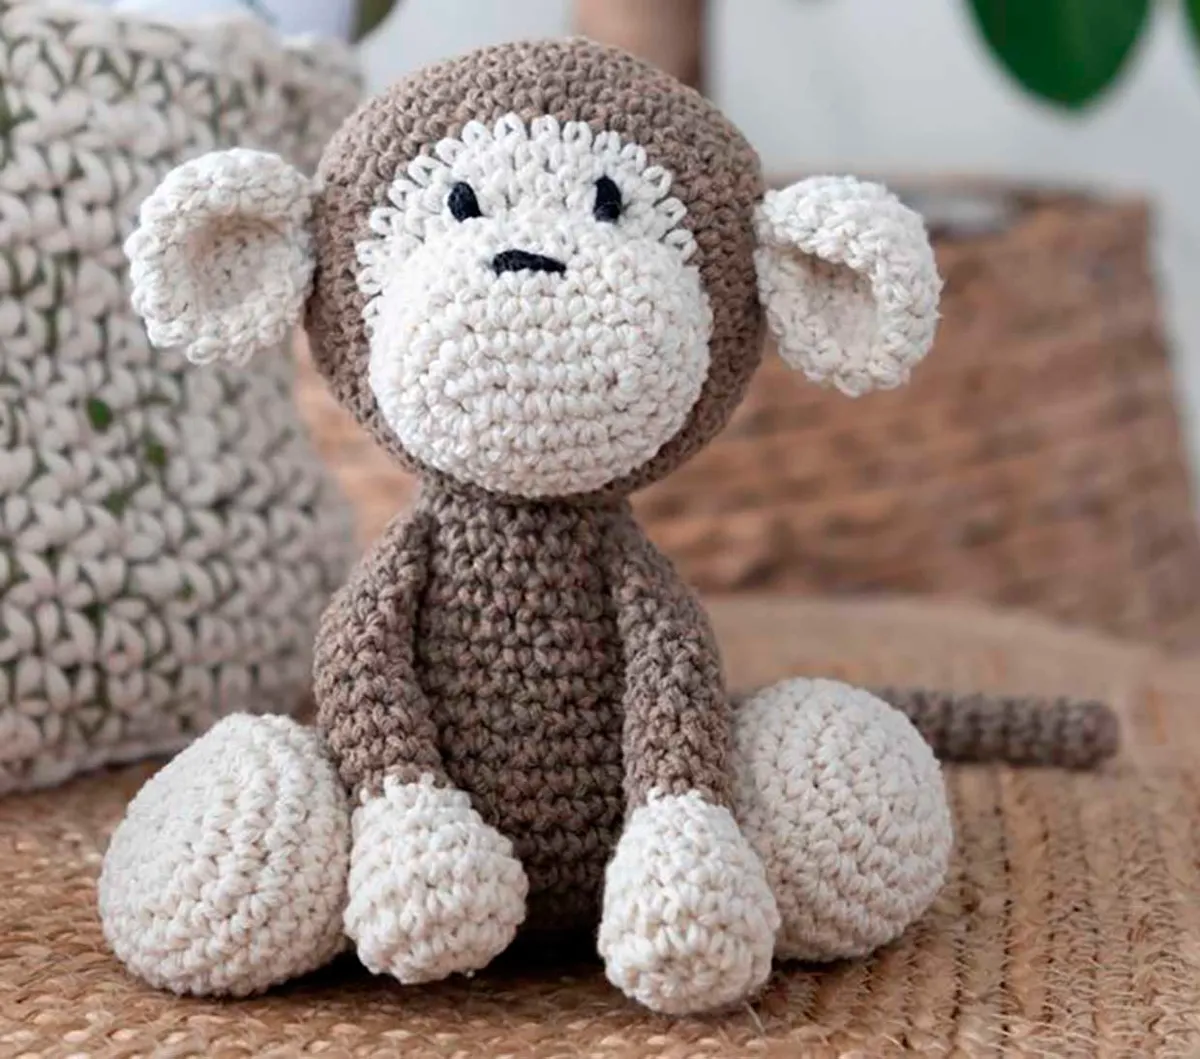 Hoooked monkey crochet kit